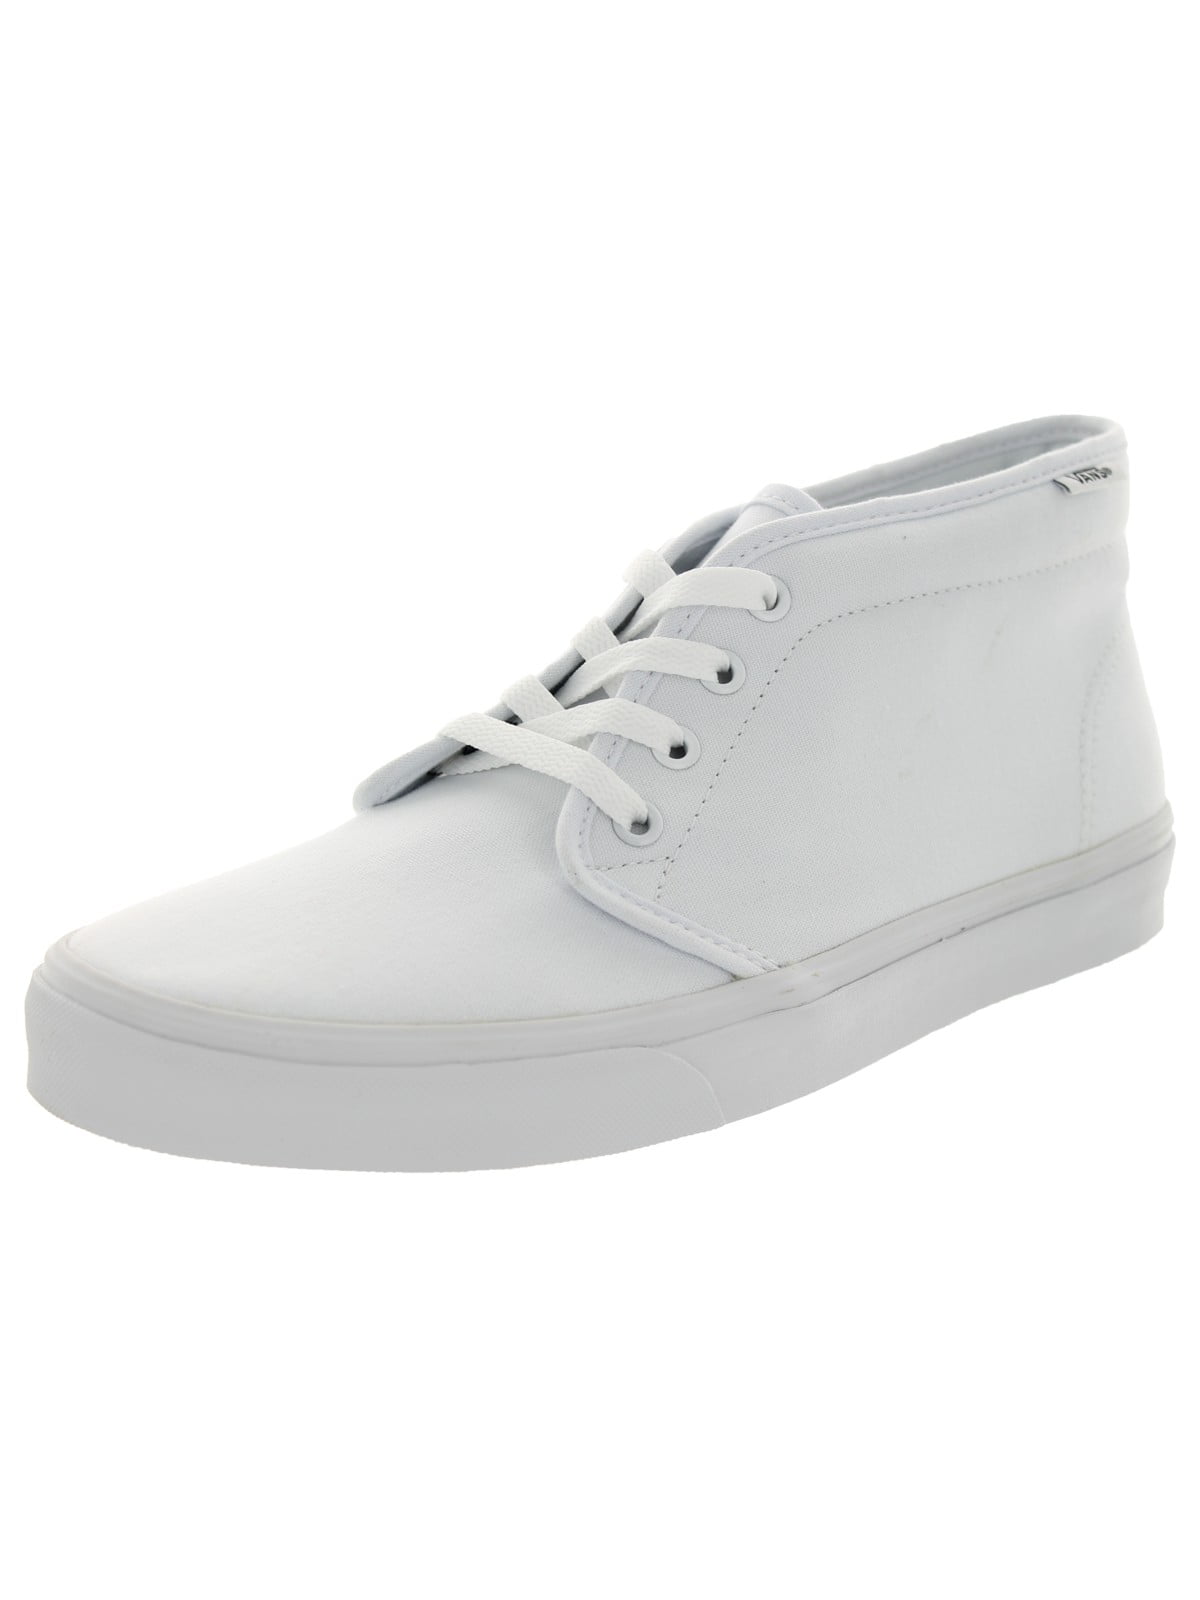 white canvas shoes walmart